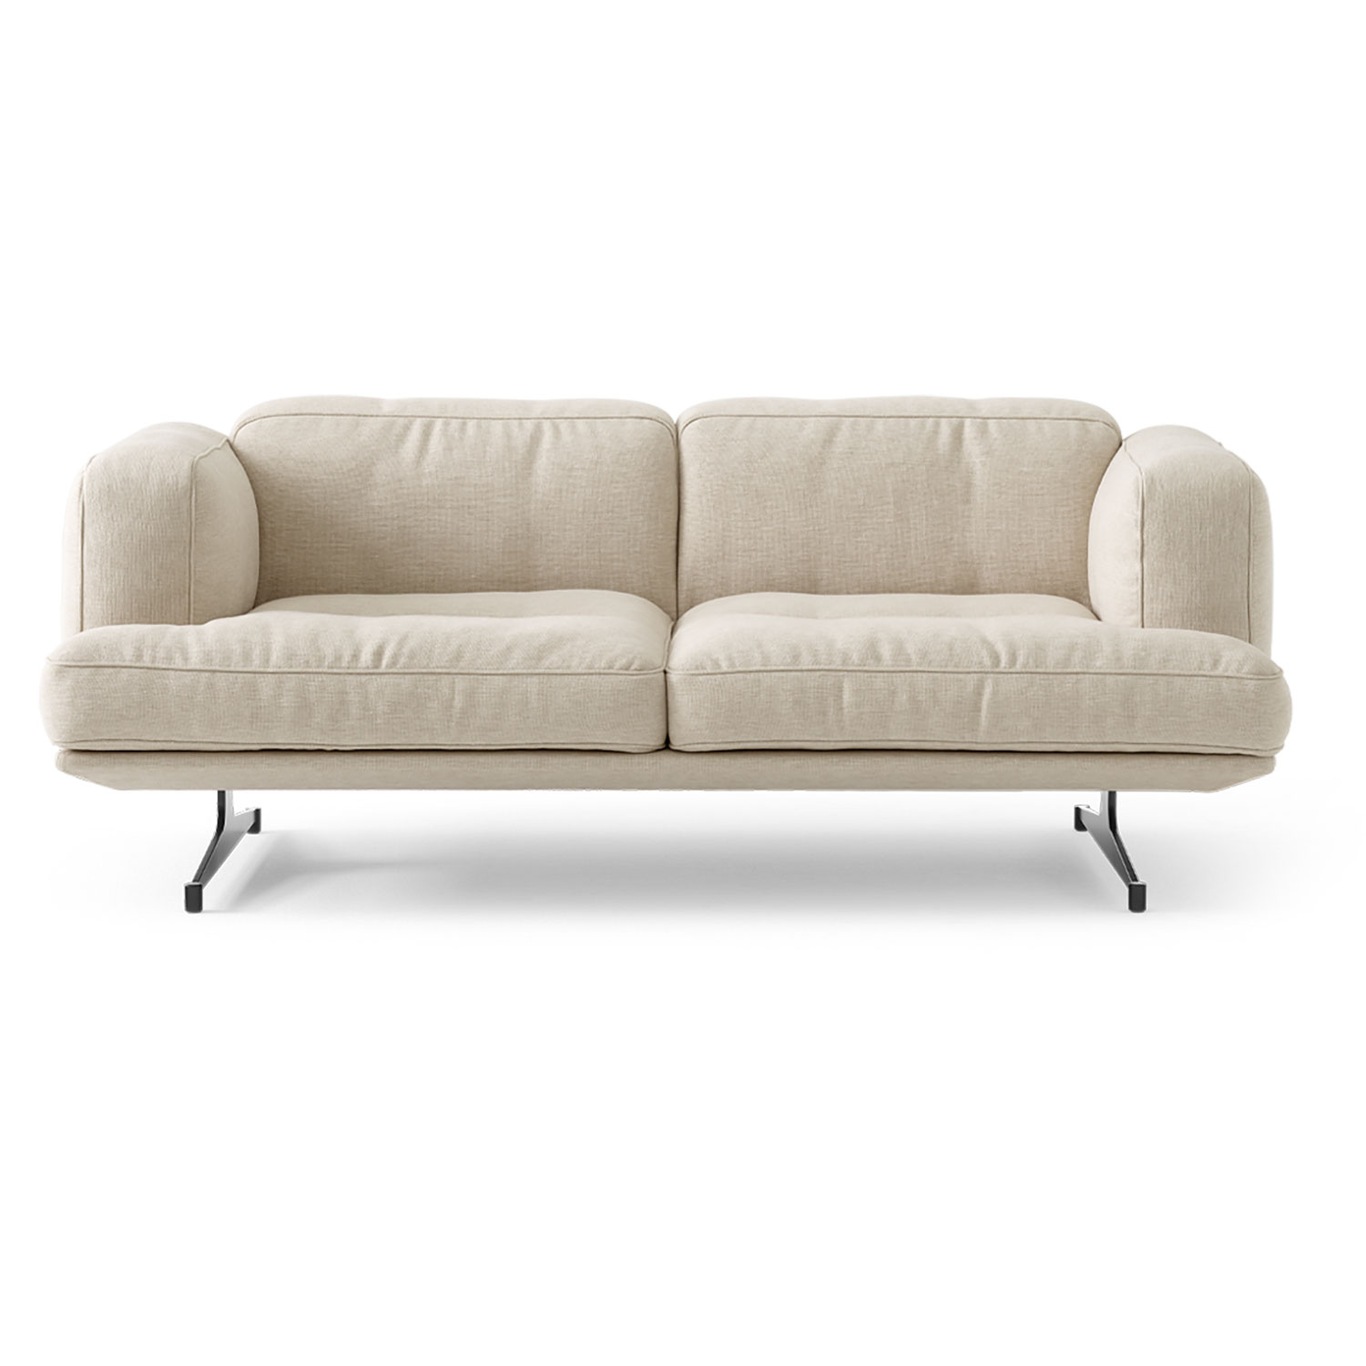 Inland AV22 2-seter Sofa, Clay 0011 / Warm Black